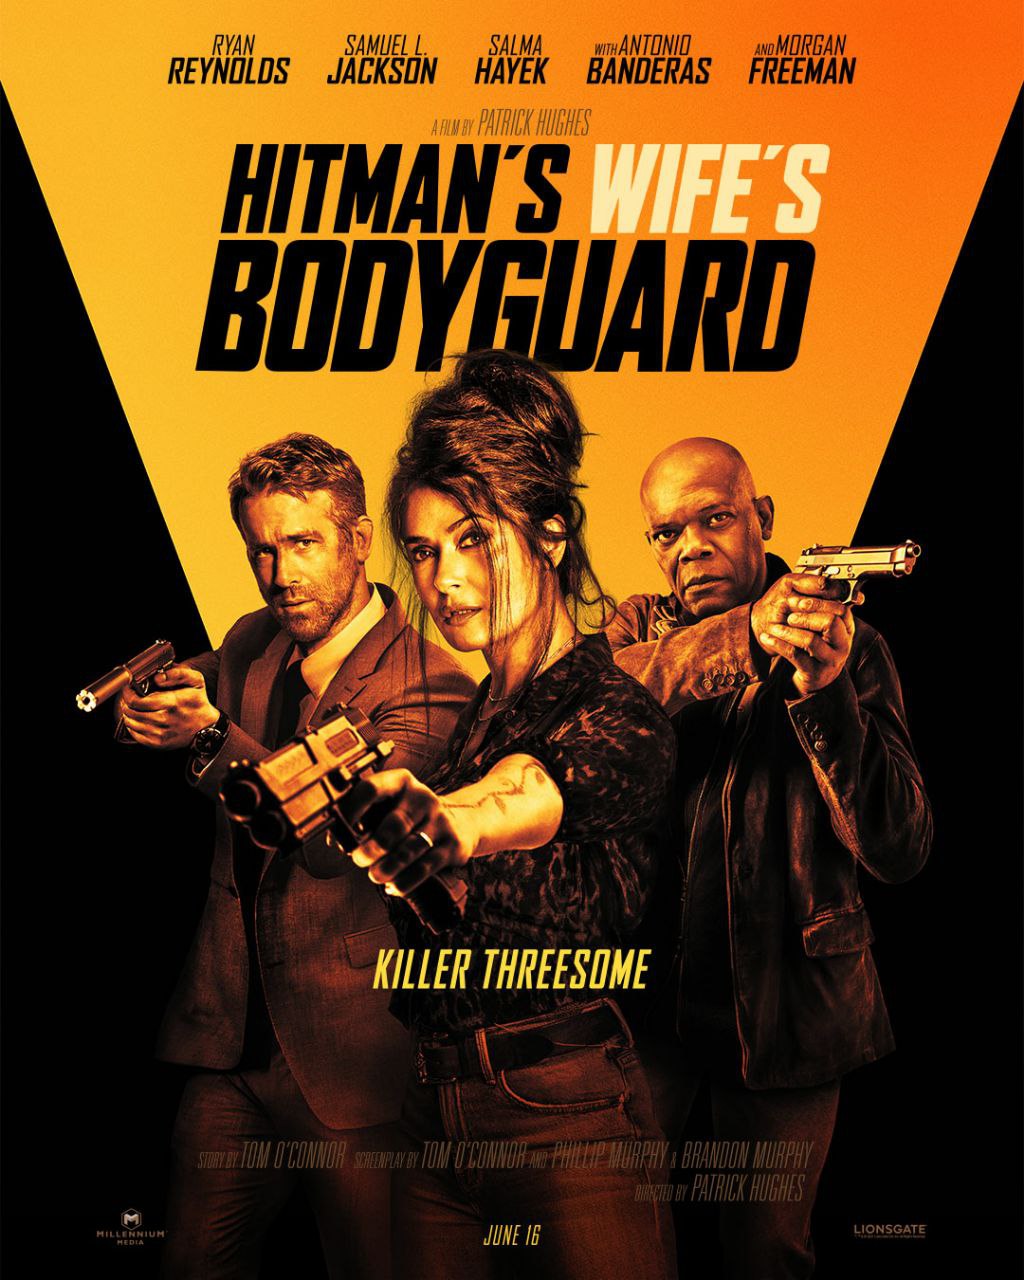 The Hitman's Wife's Body Guard